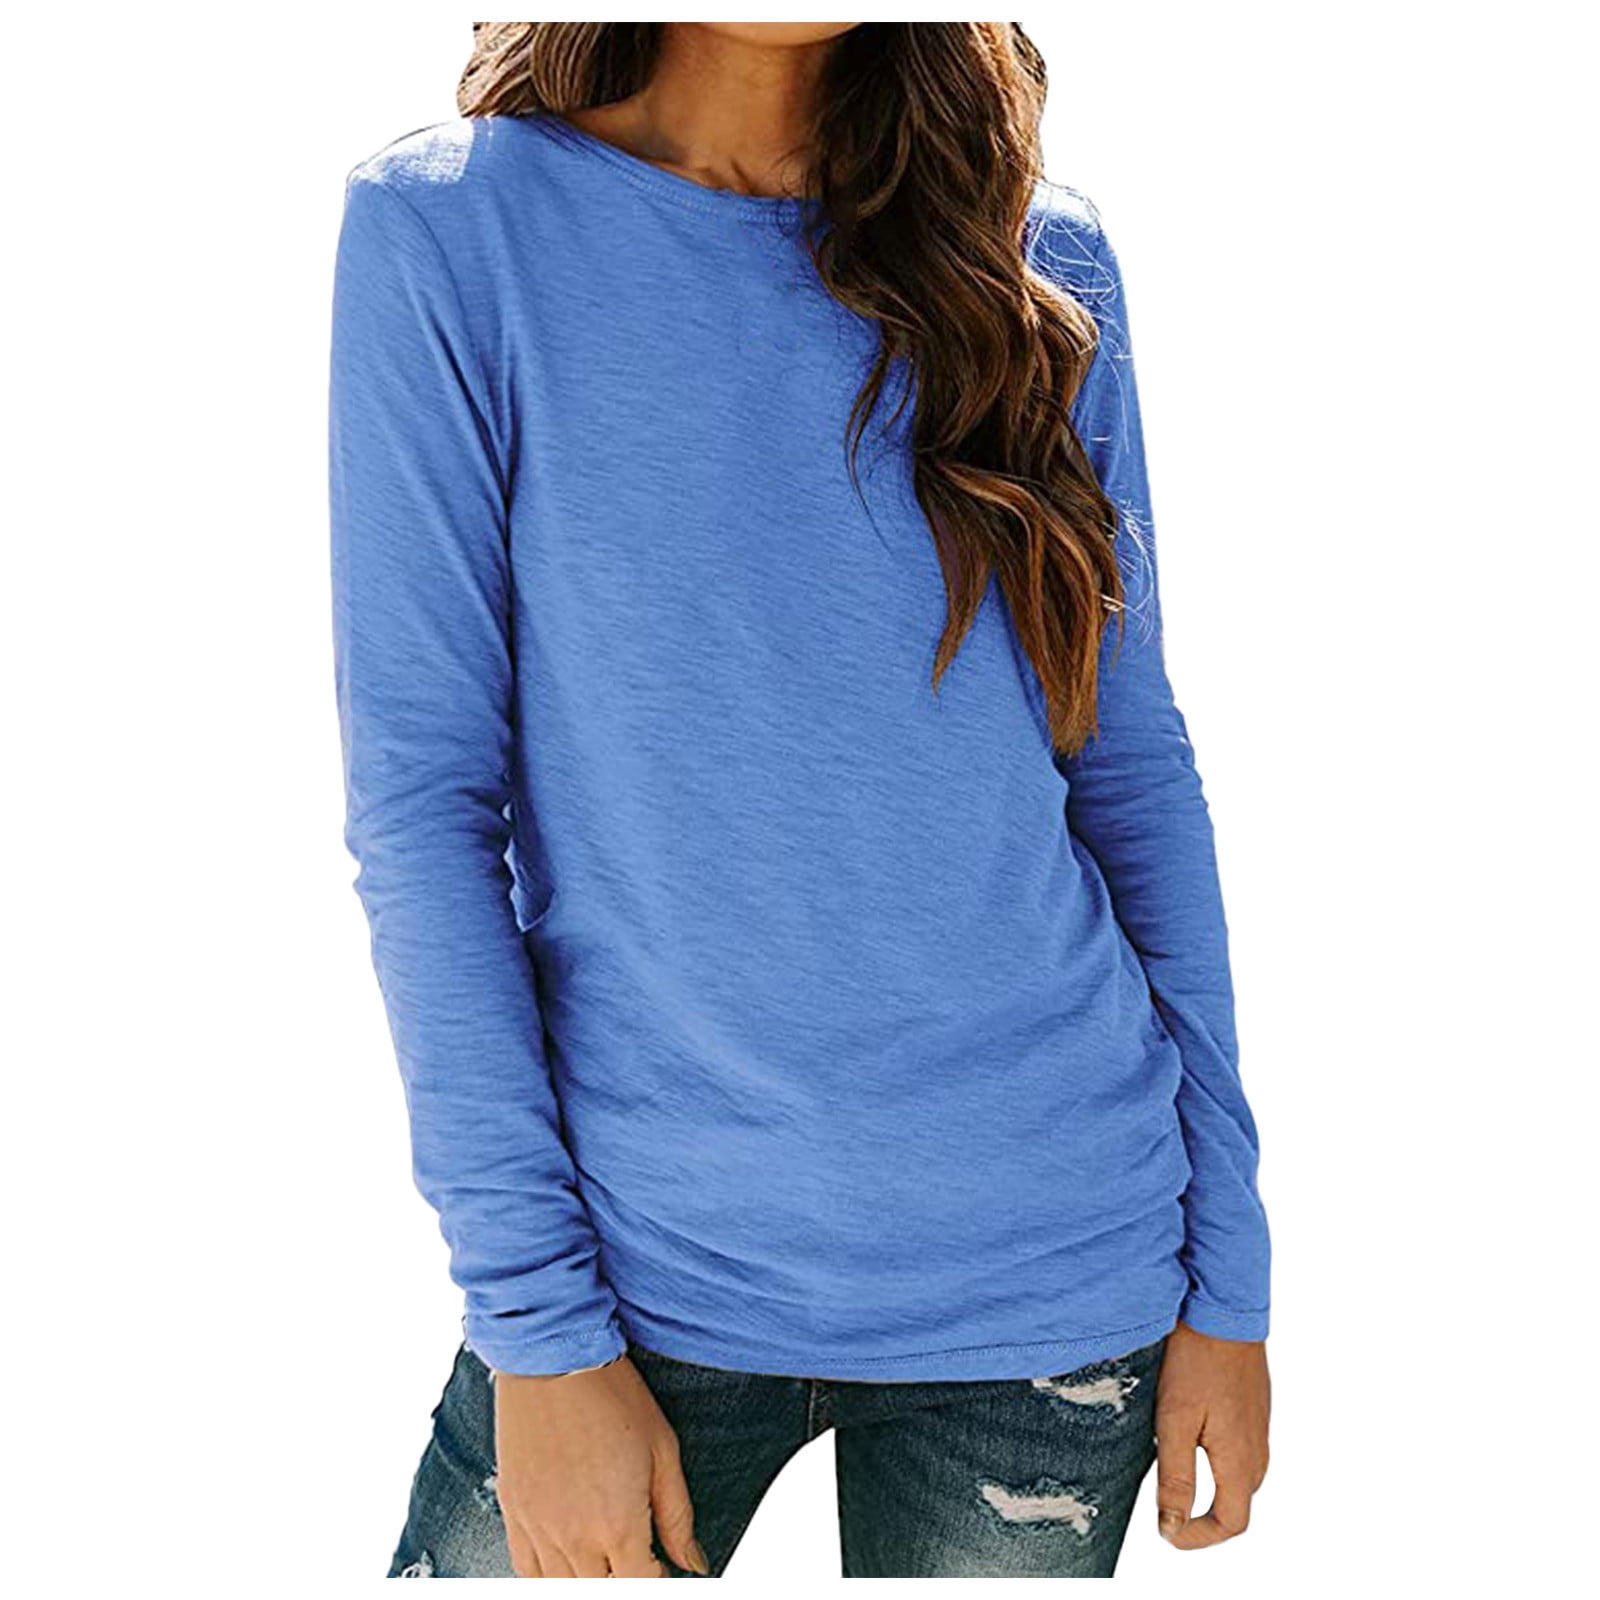 Clearance Women Teen Girls Long Sleeve Tops Blouse T-Shirt Cuekondy Fashion Stripe Printed O-Neck Autumn Winter Pullover 